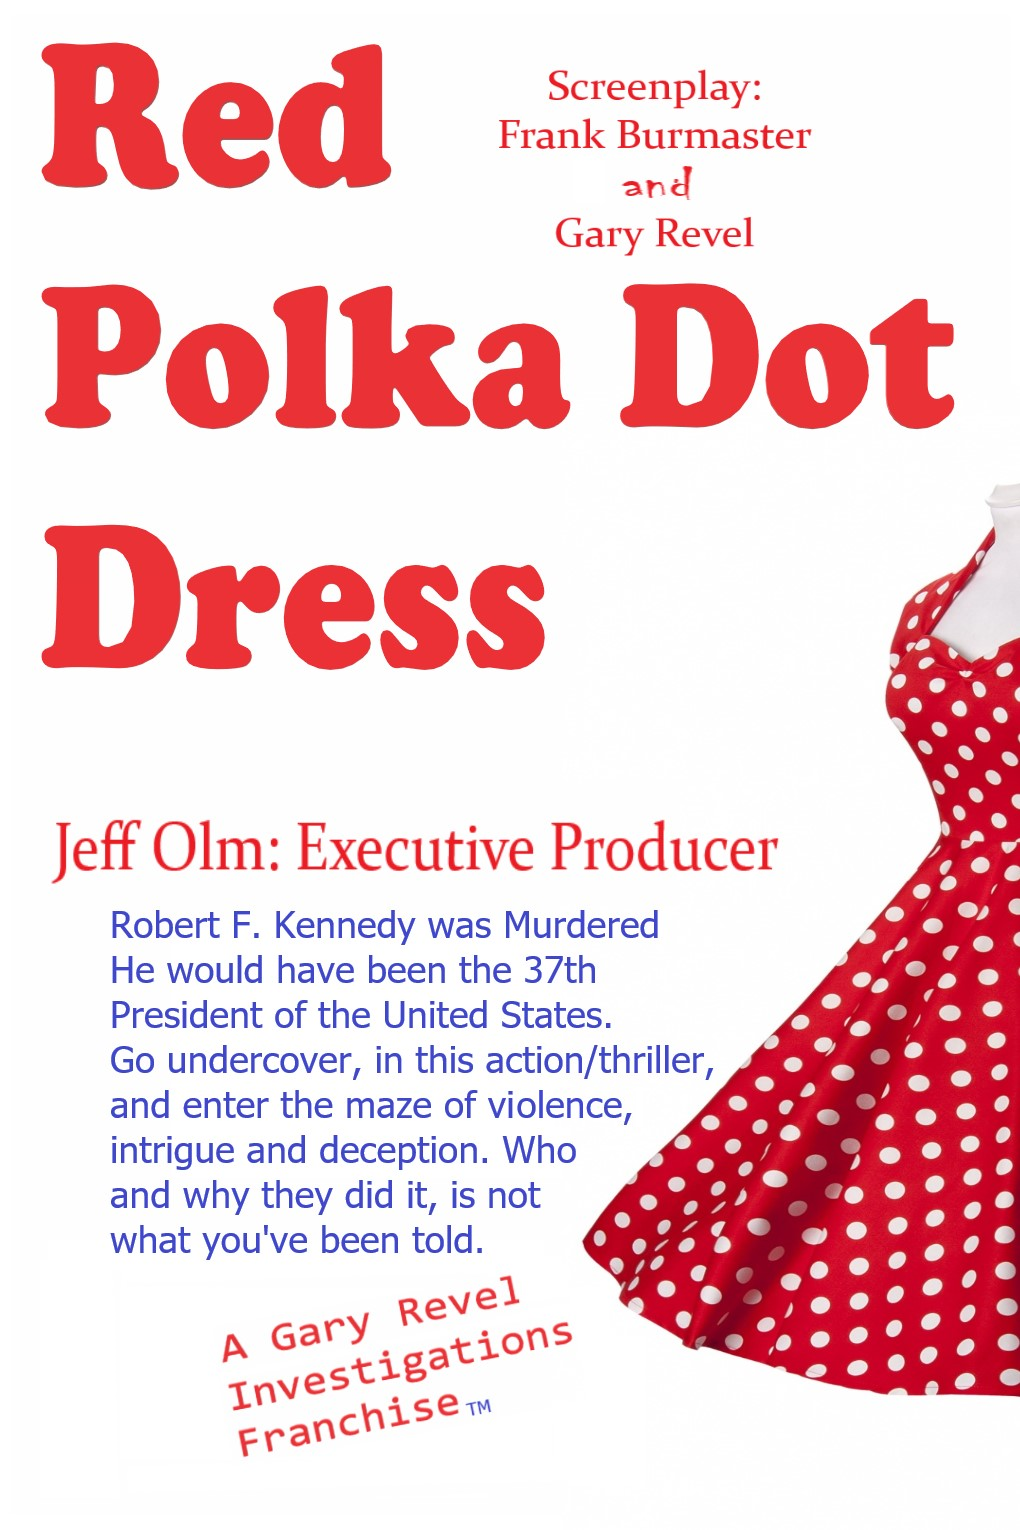 Red Polka Dot Dress promo RFK Assassination promo